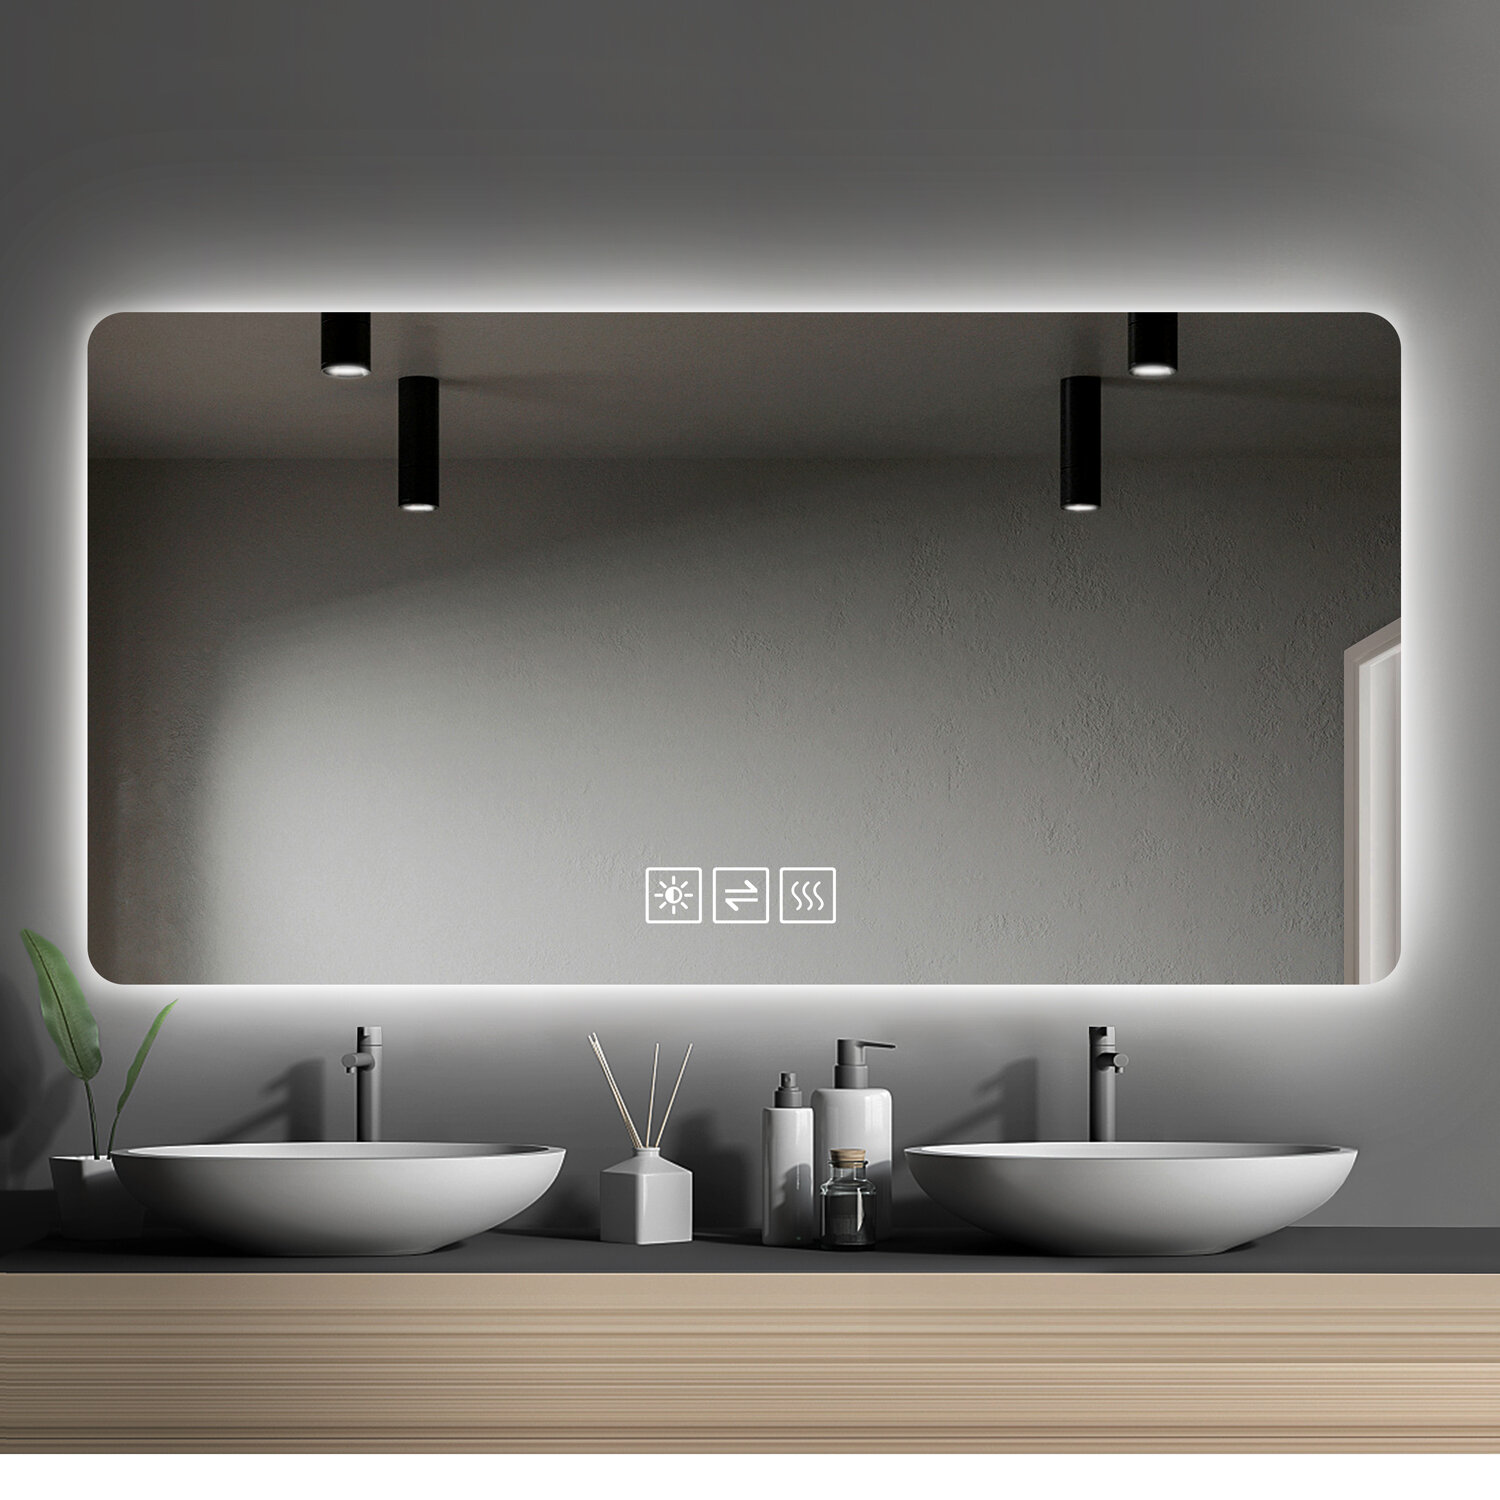 show original title Details about   LED Wall Bathroom MirrorOptions sizeLightPremium m1zp-16 